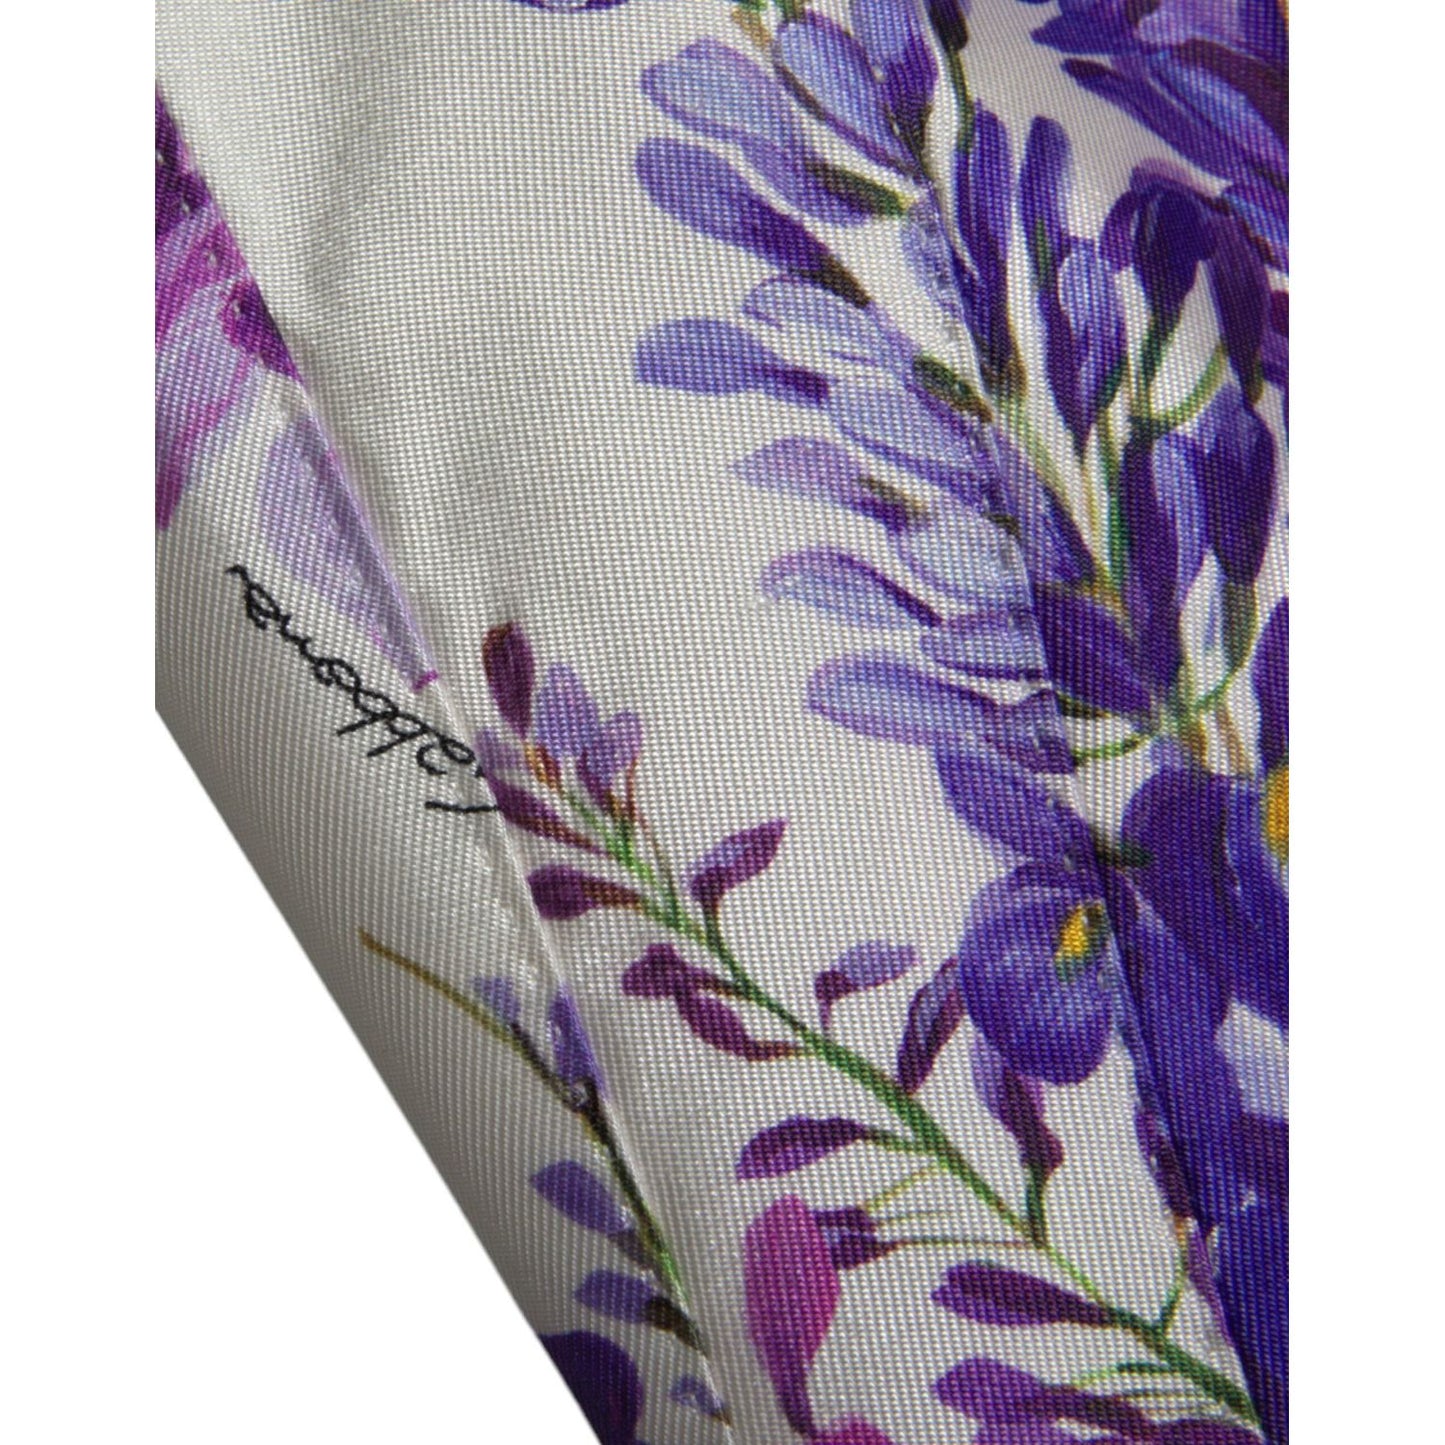 Dolce & Gabbana Floral Print Silk Blend Waistcoat white-floral-print-silk-waistcoat-vest-top